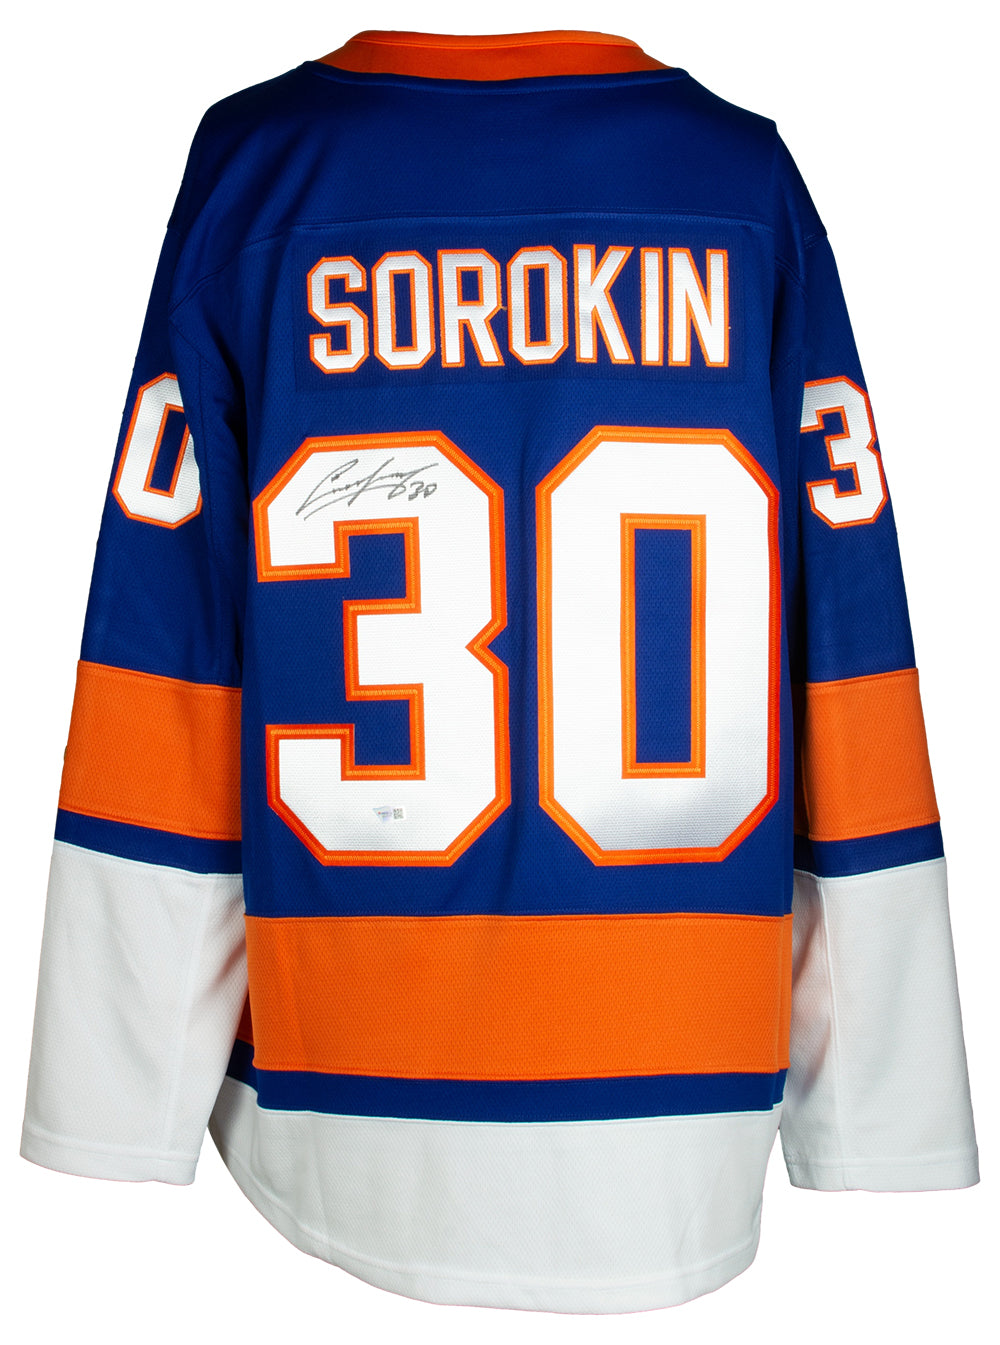 New York Islanders Firstar Gamewear Pro Performance Hockey Jersey with 